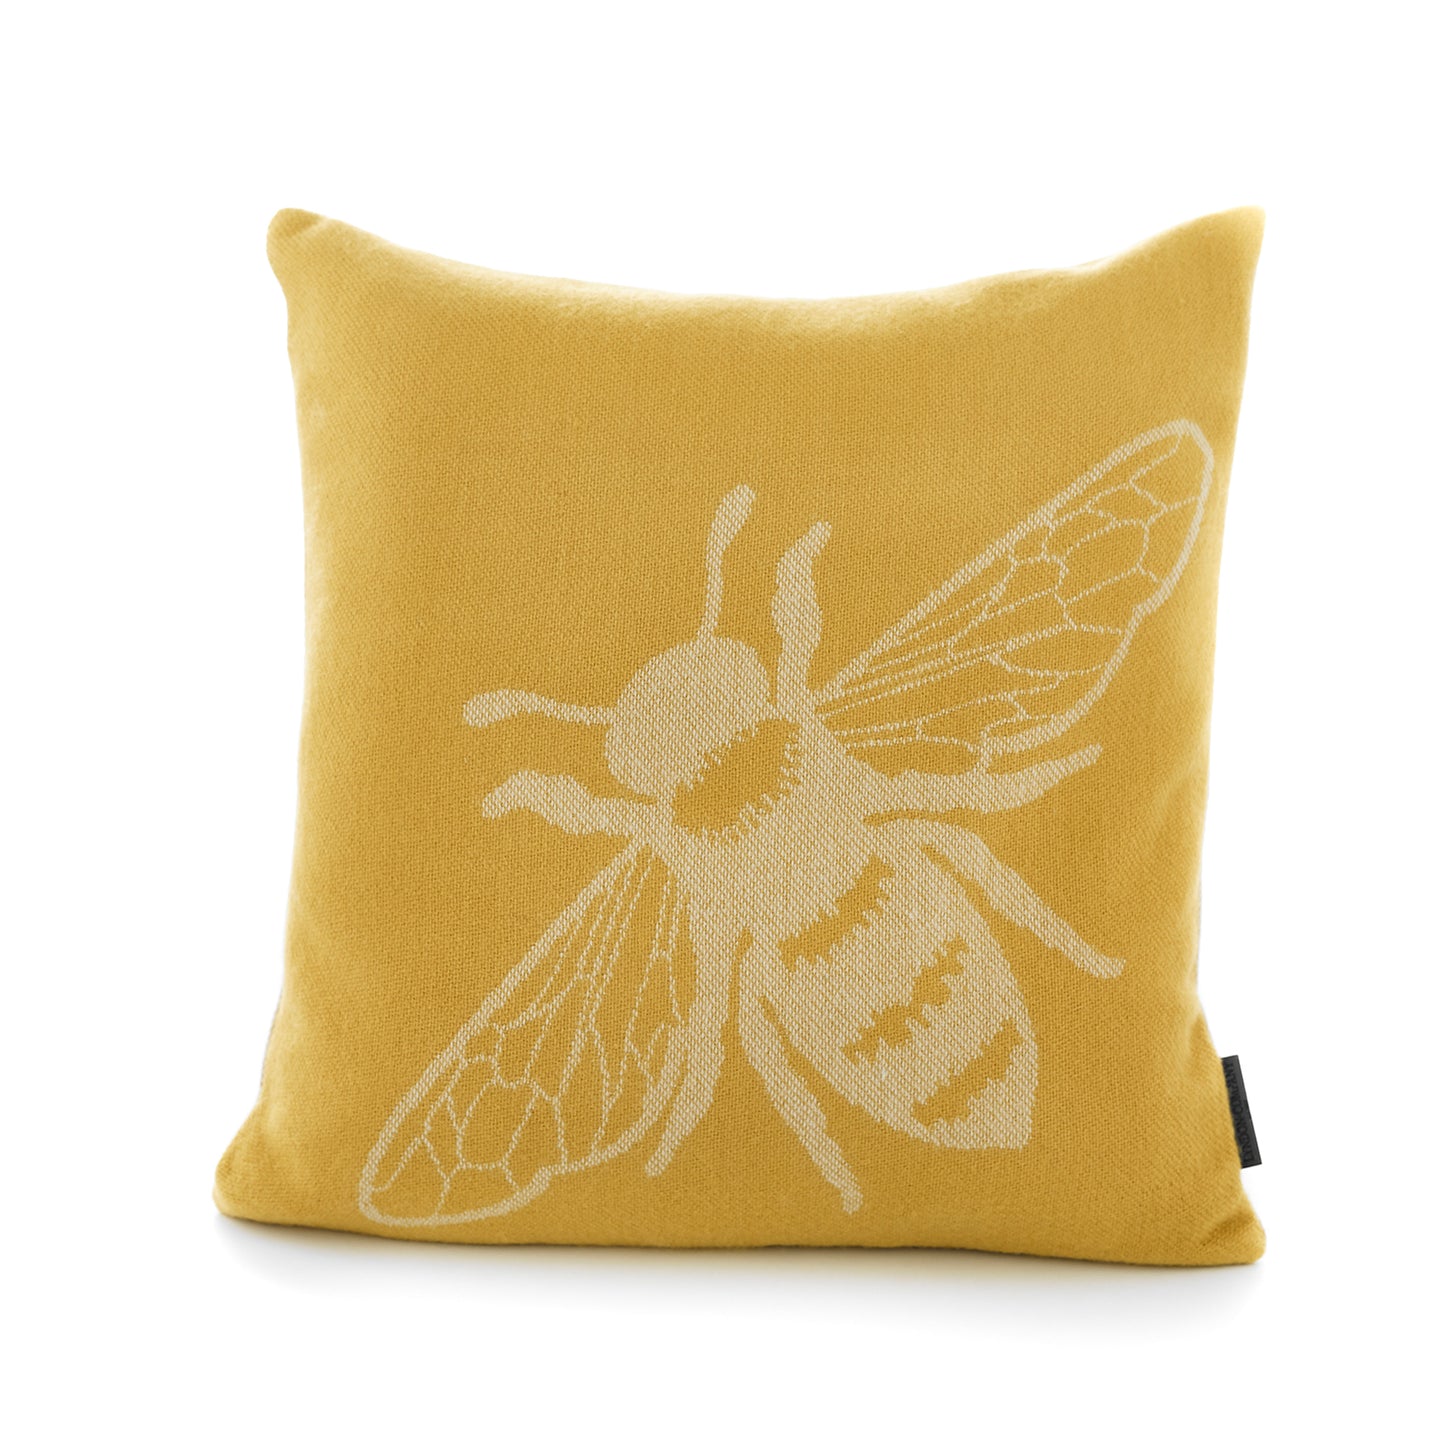 The Lyndon Company Bee Ochre Soft Knitted Cushion (45cm x 45cm)